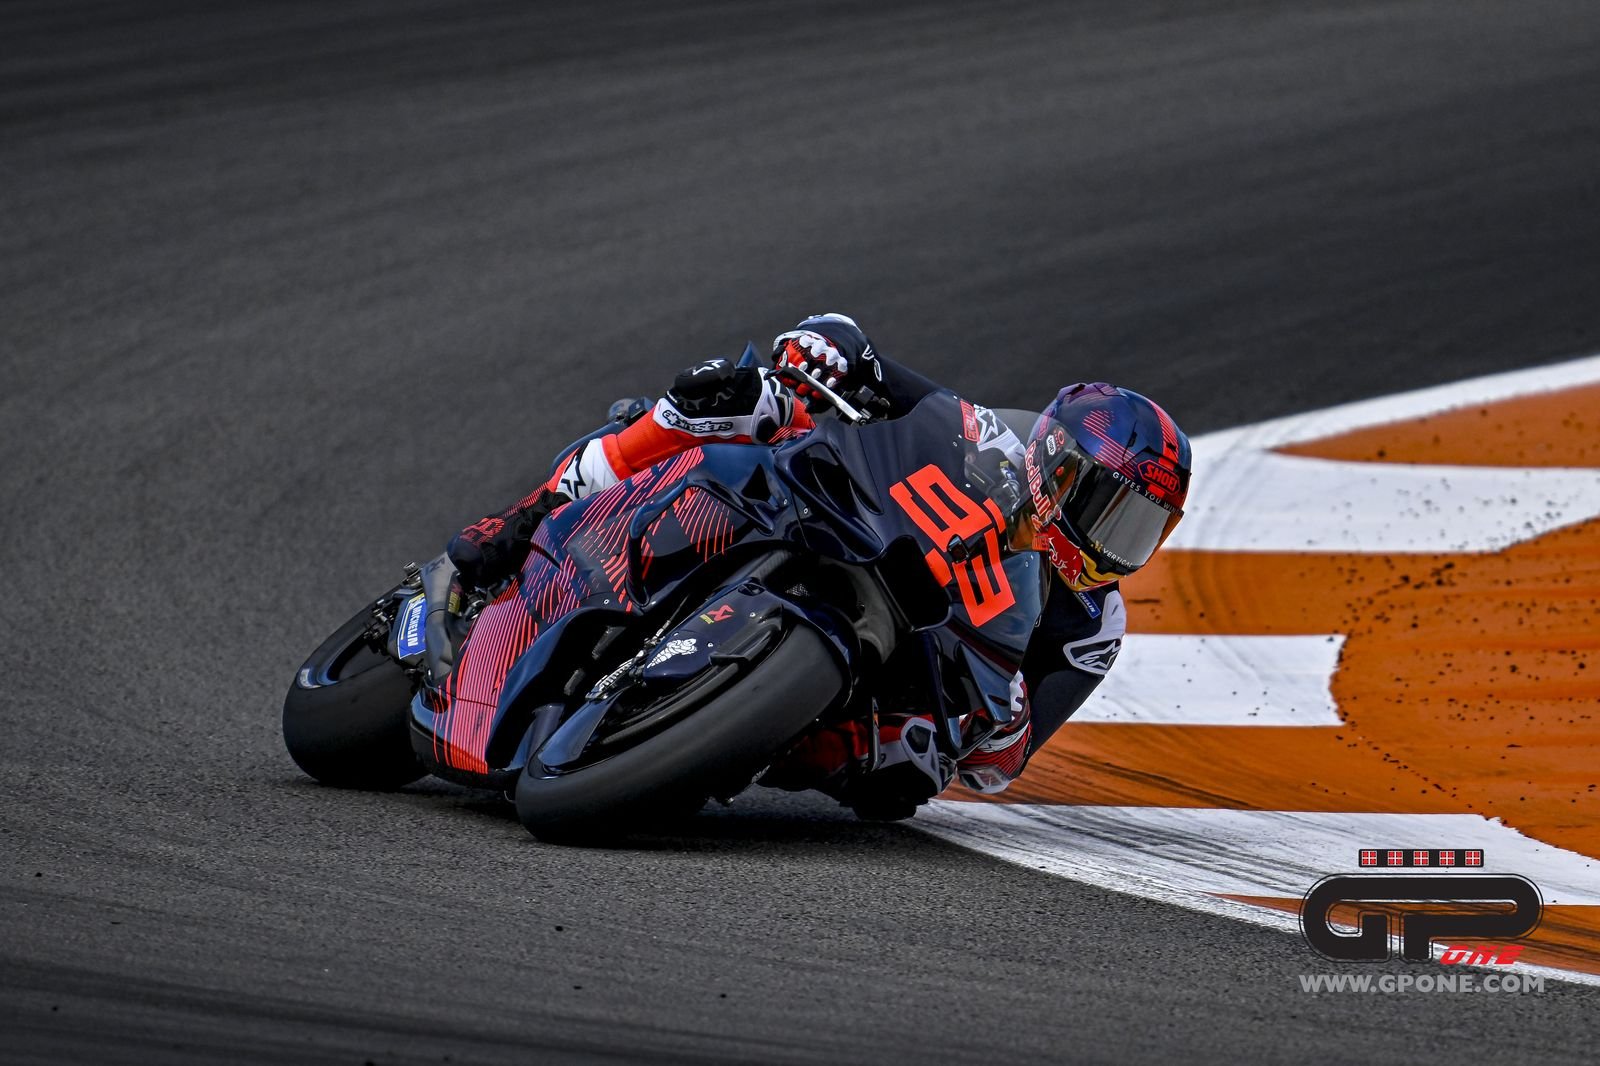 MotoGP Motorrad-Garagenmatte, 190 cm x 80 cm, offizielles Moto GP-Produkt